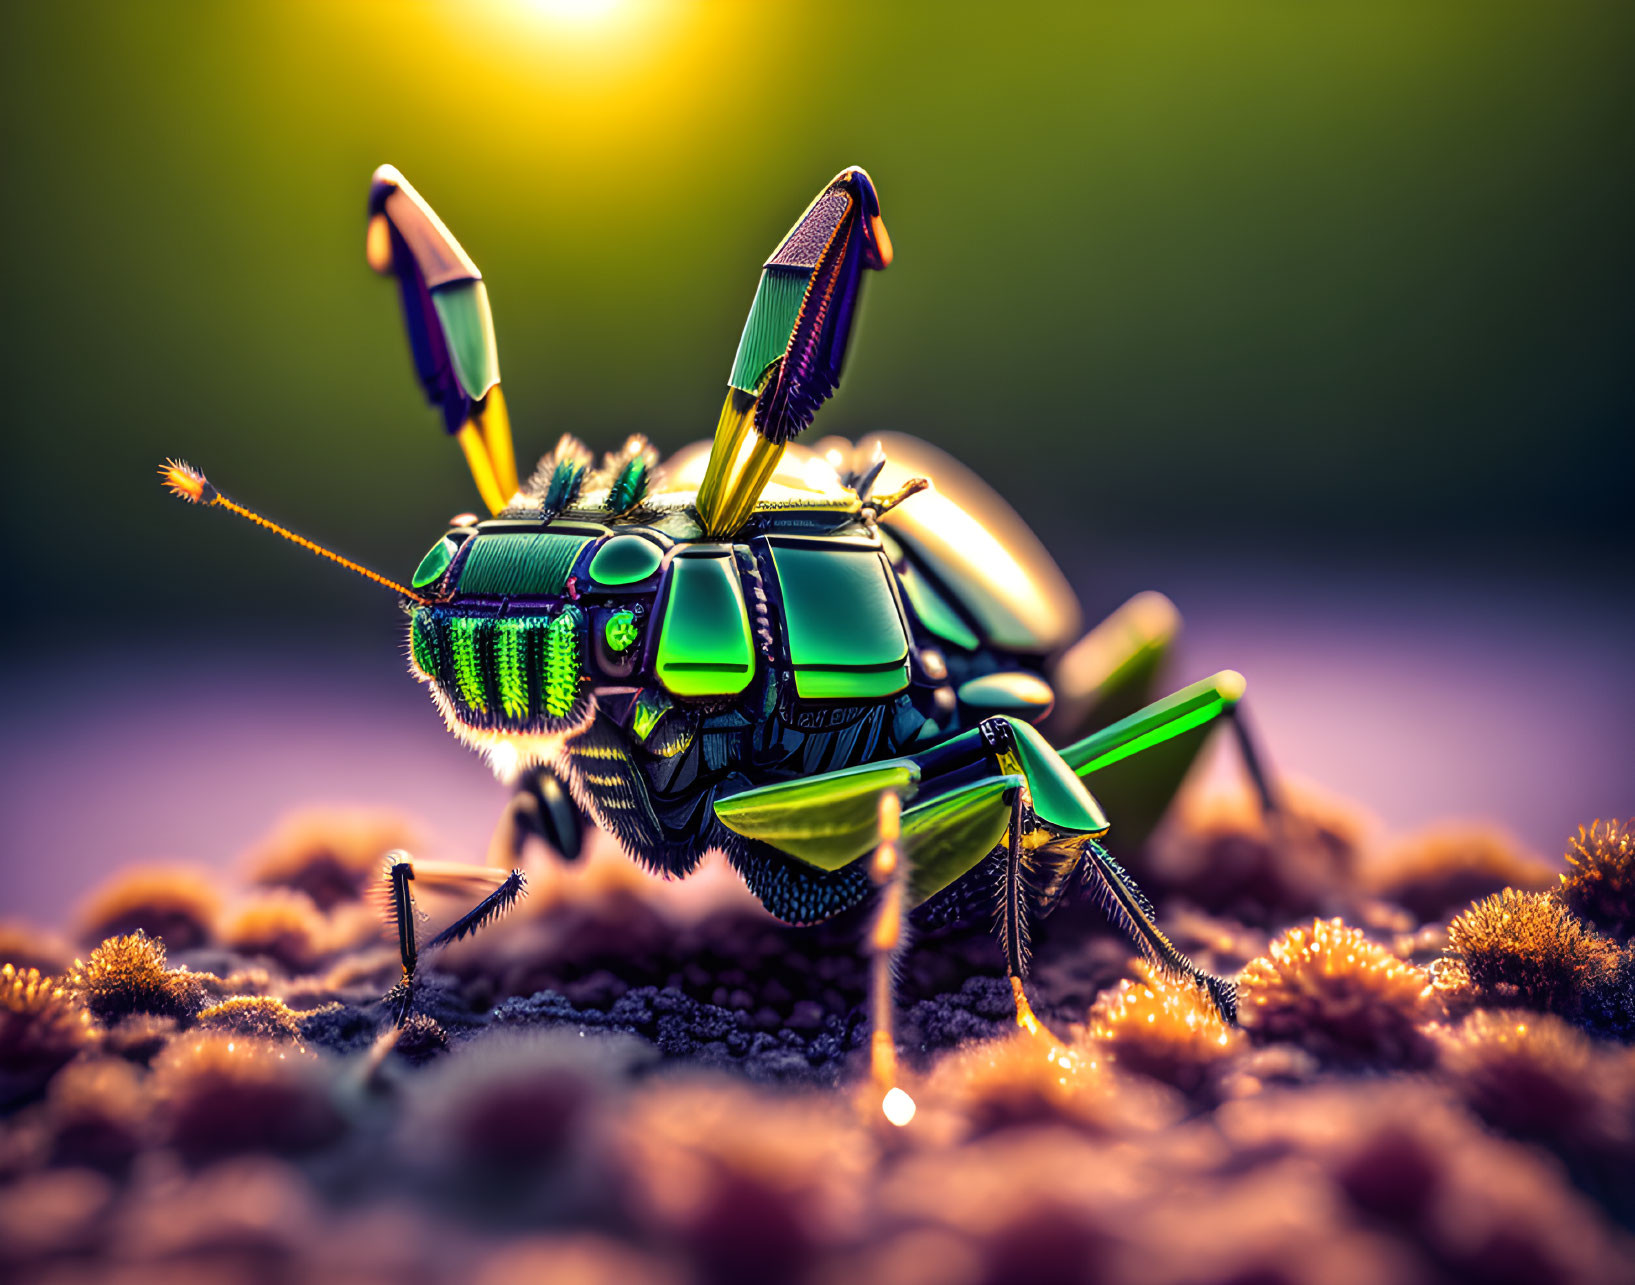 Robot grasshopper